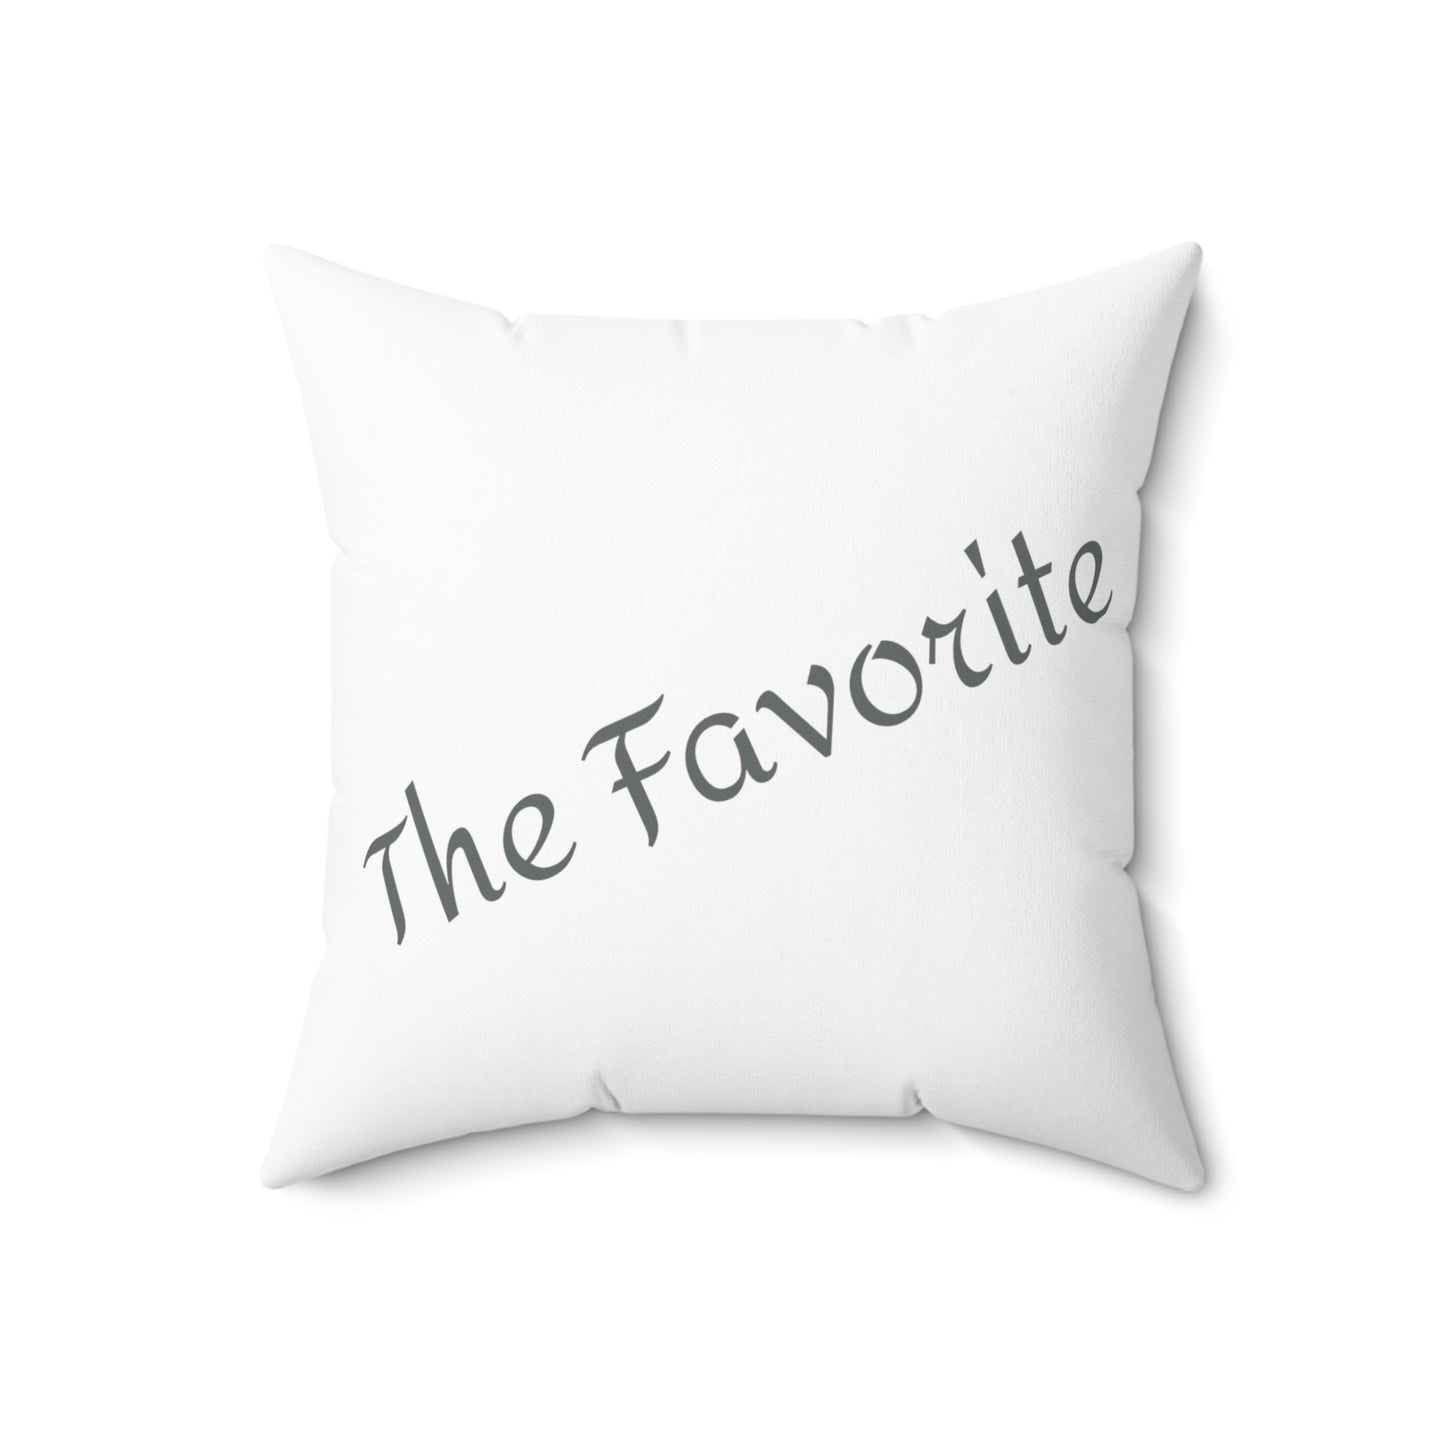 "The Favorite" Spun Polyester Square Pillow